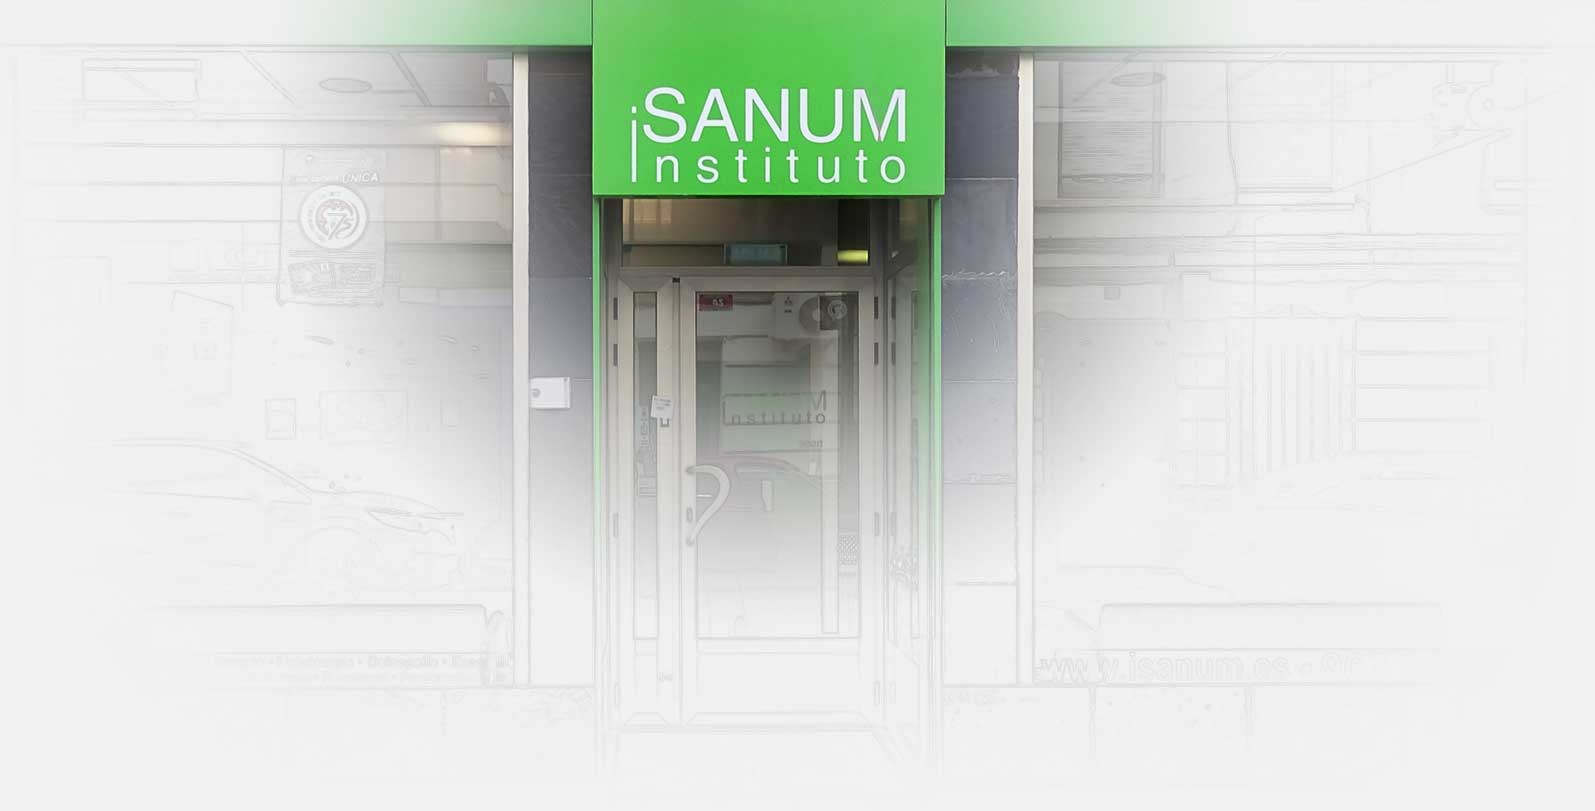 imagen de la clinica instituto sanum en albacete